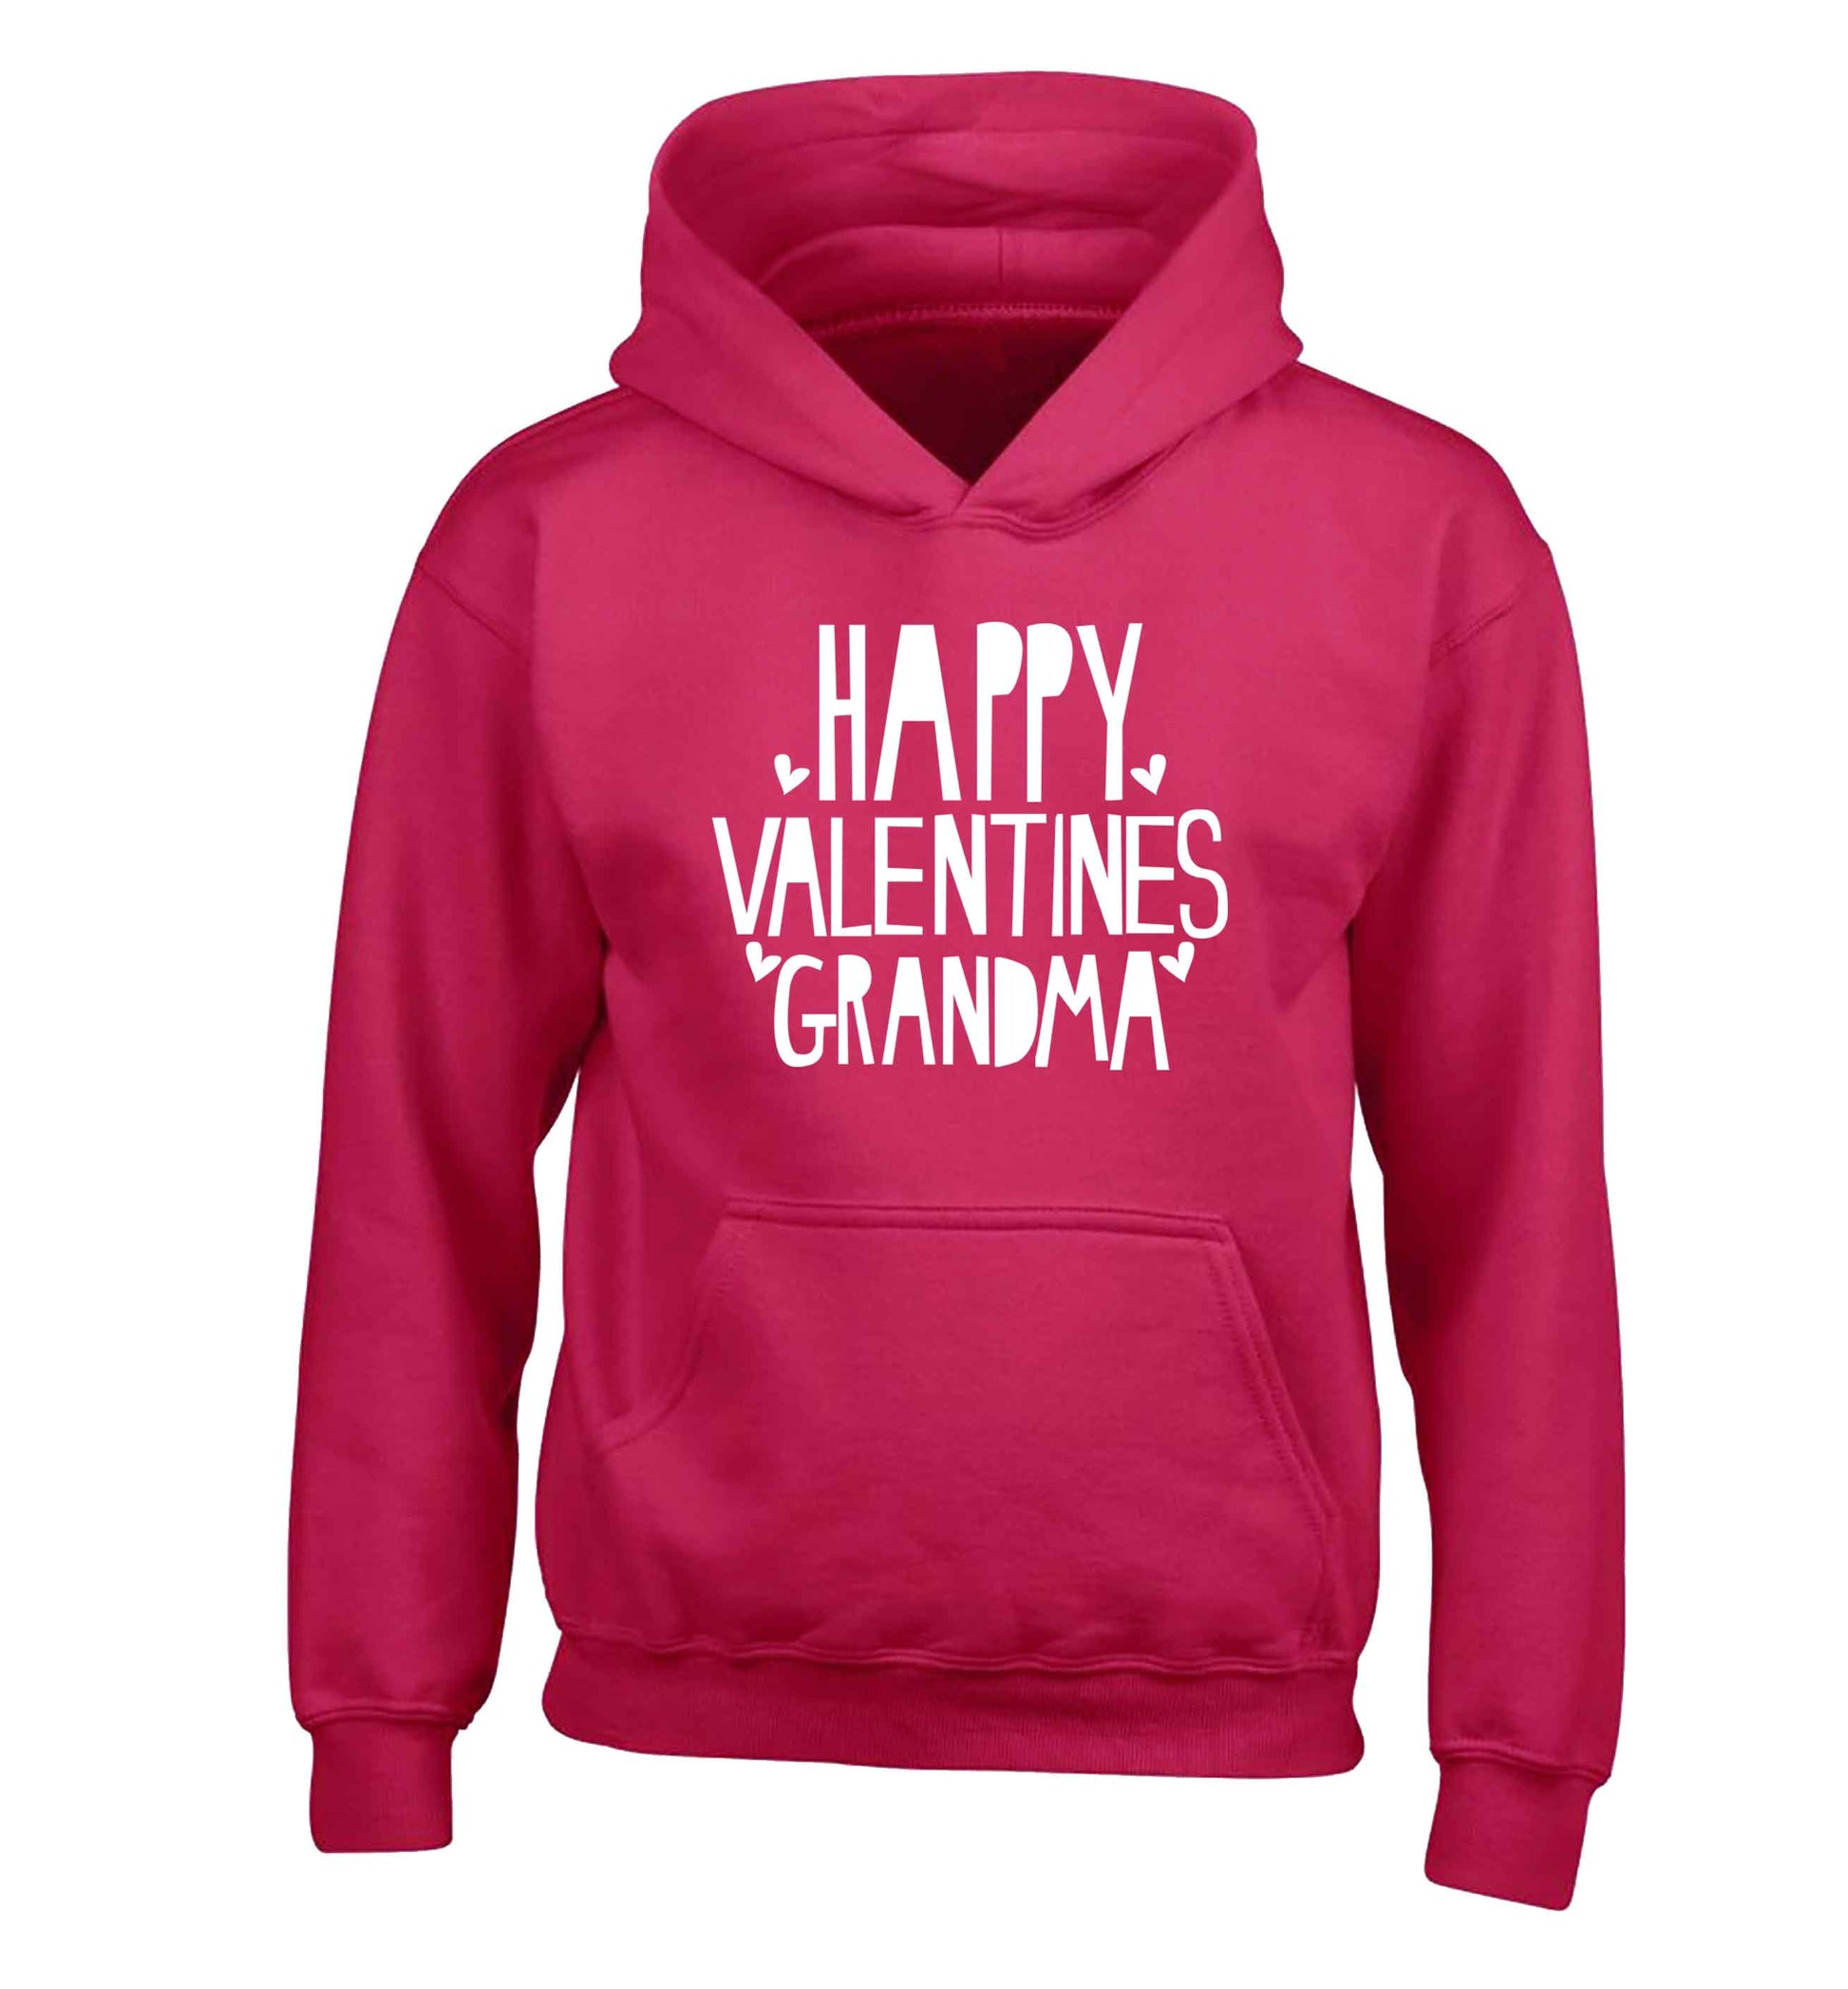 Happy valentines grandma children's pink hoodie 12-13 Years